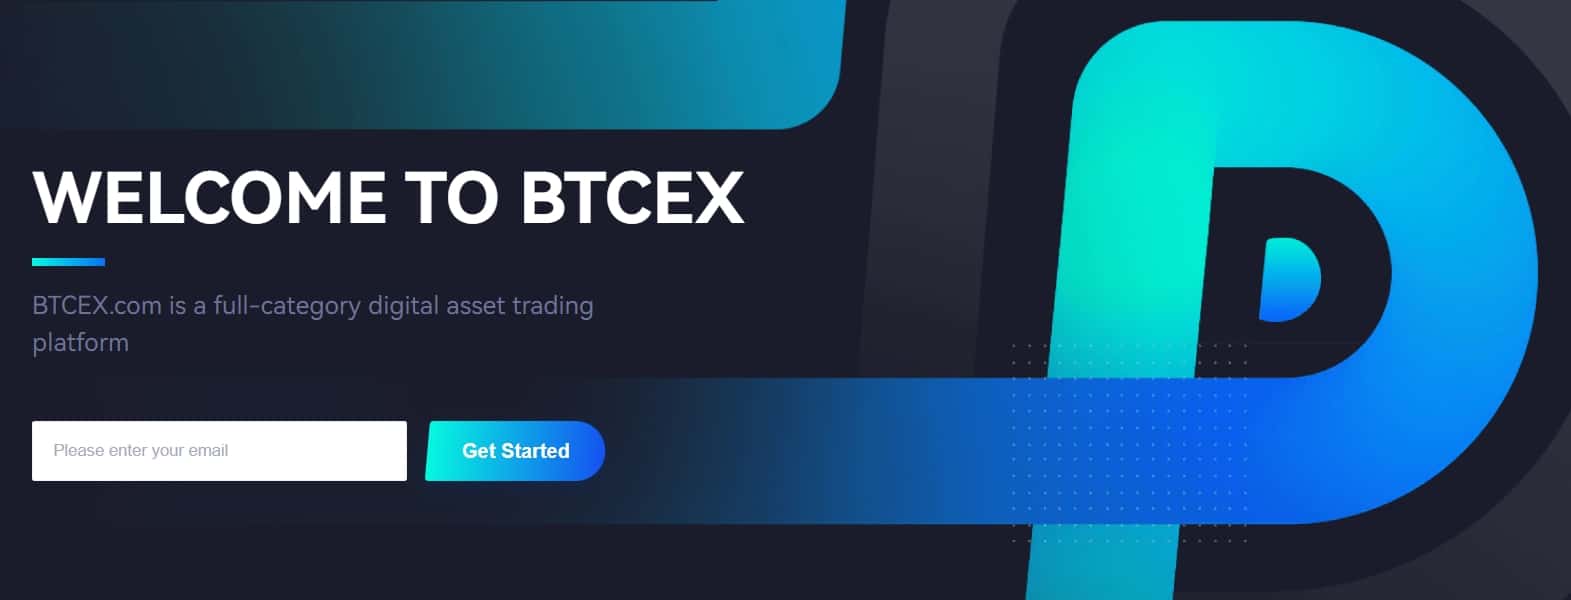 BTCEX website